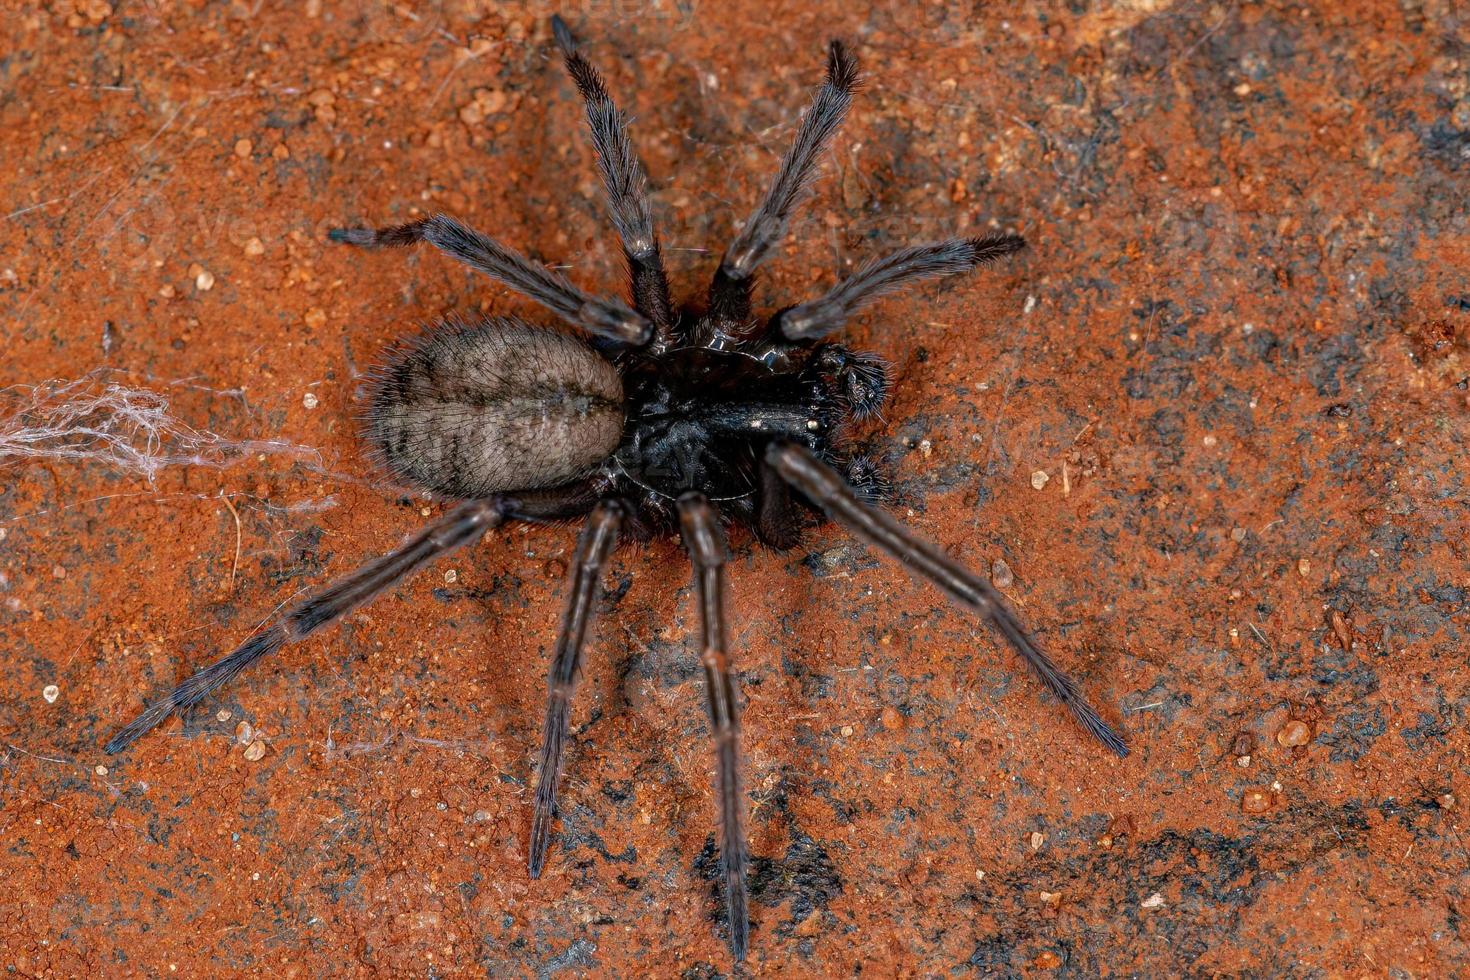 Adult Titanoecid Spider photo